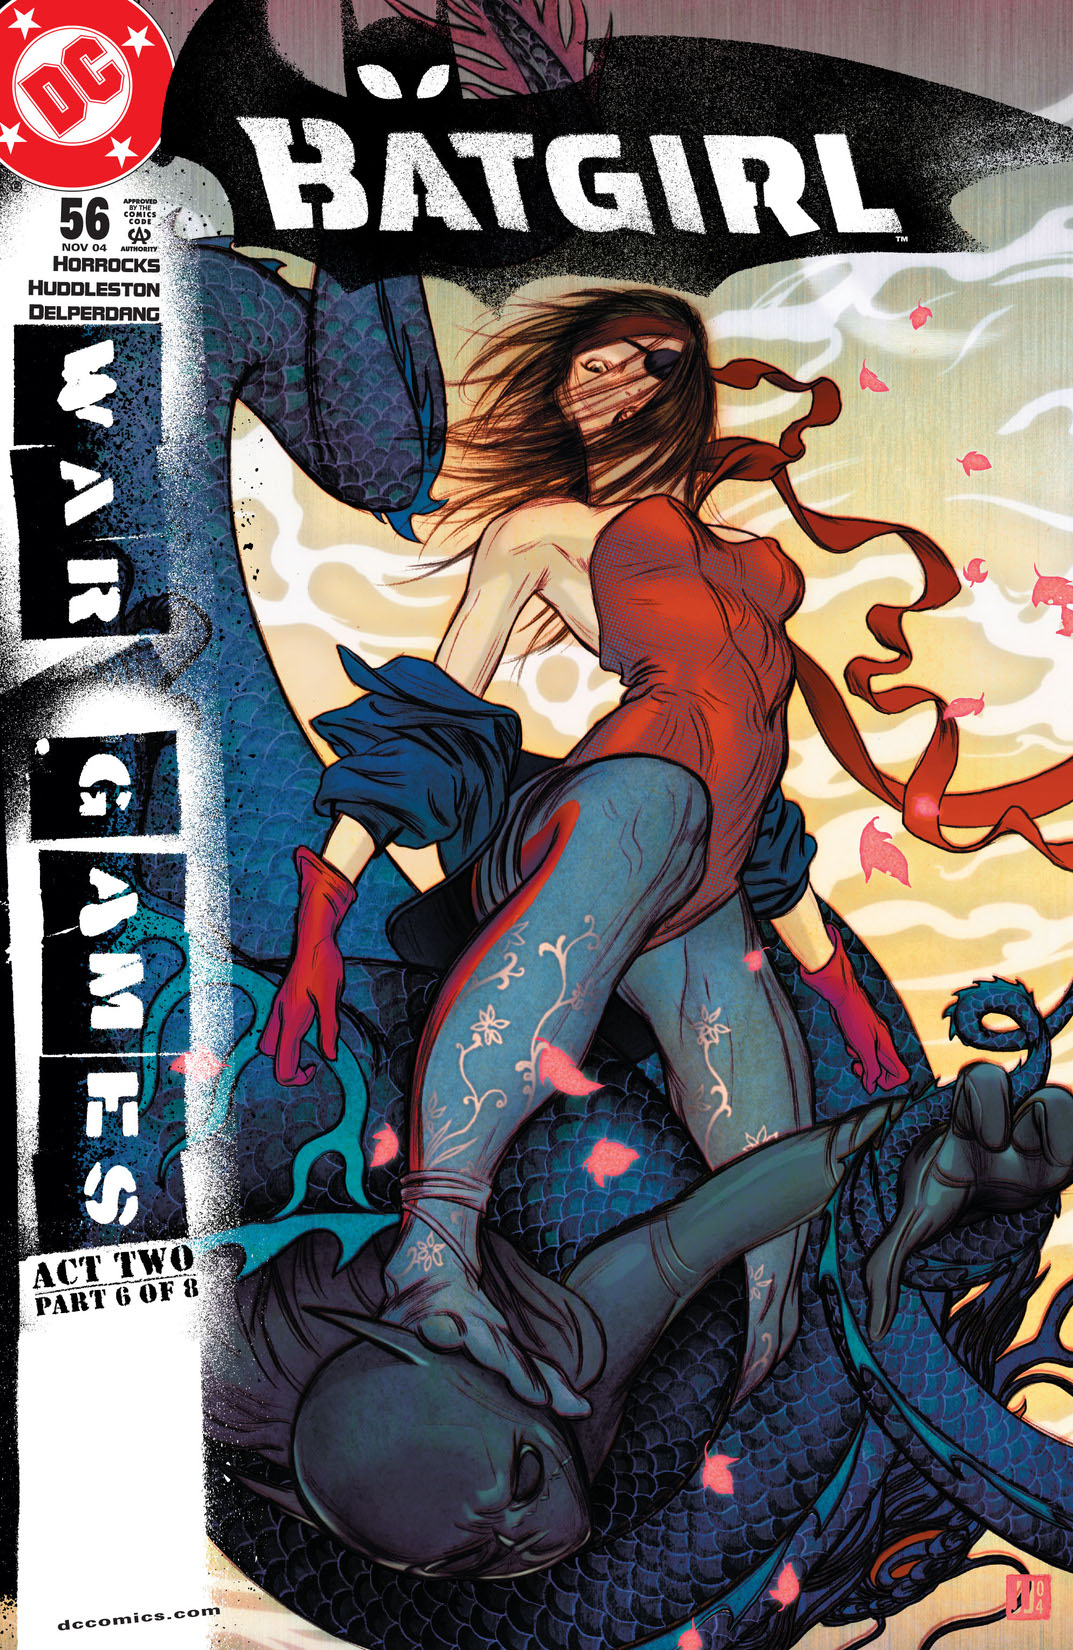 Batgirl (2000-) #56 preview images